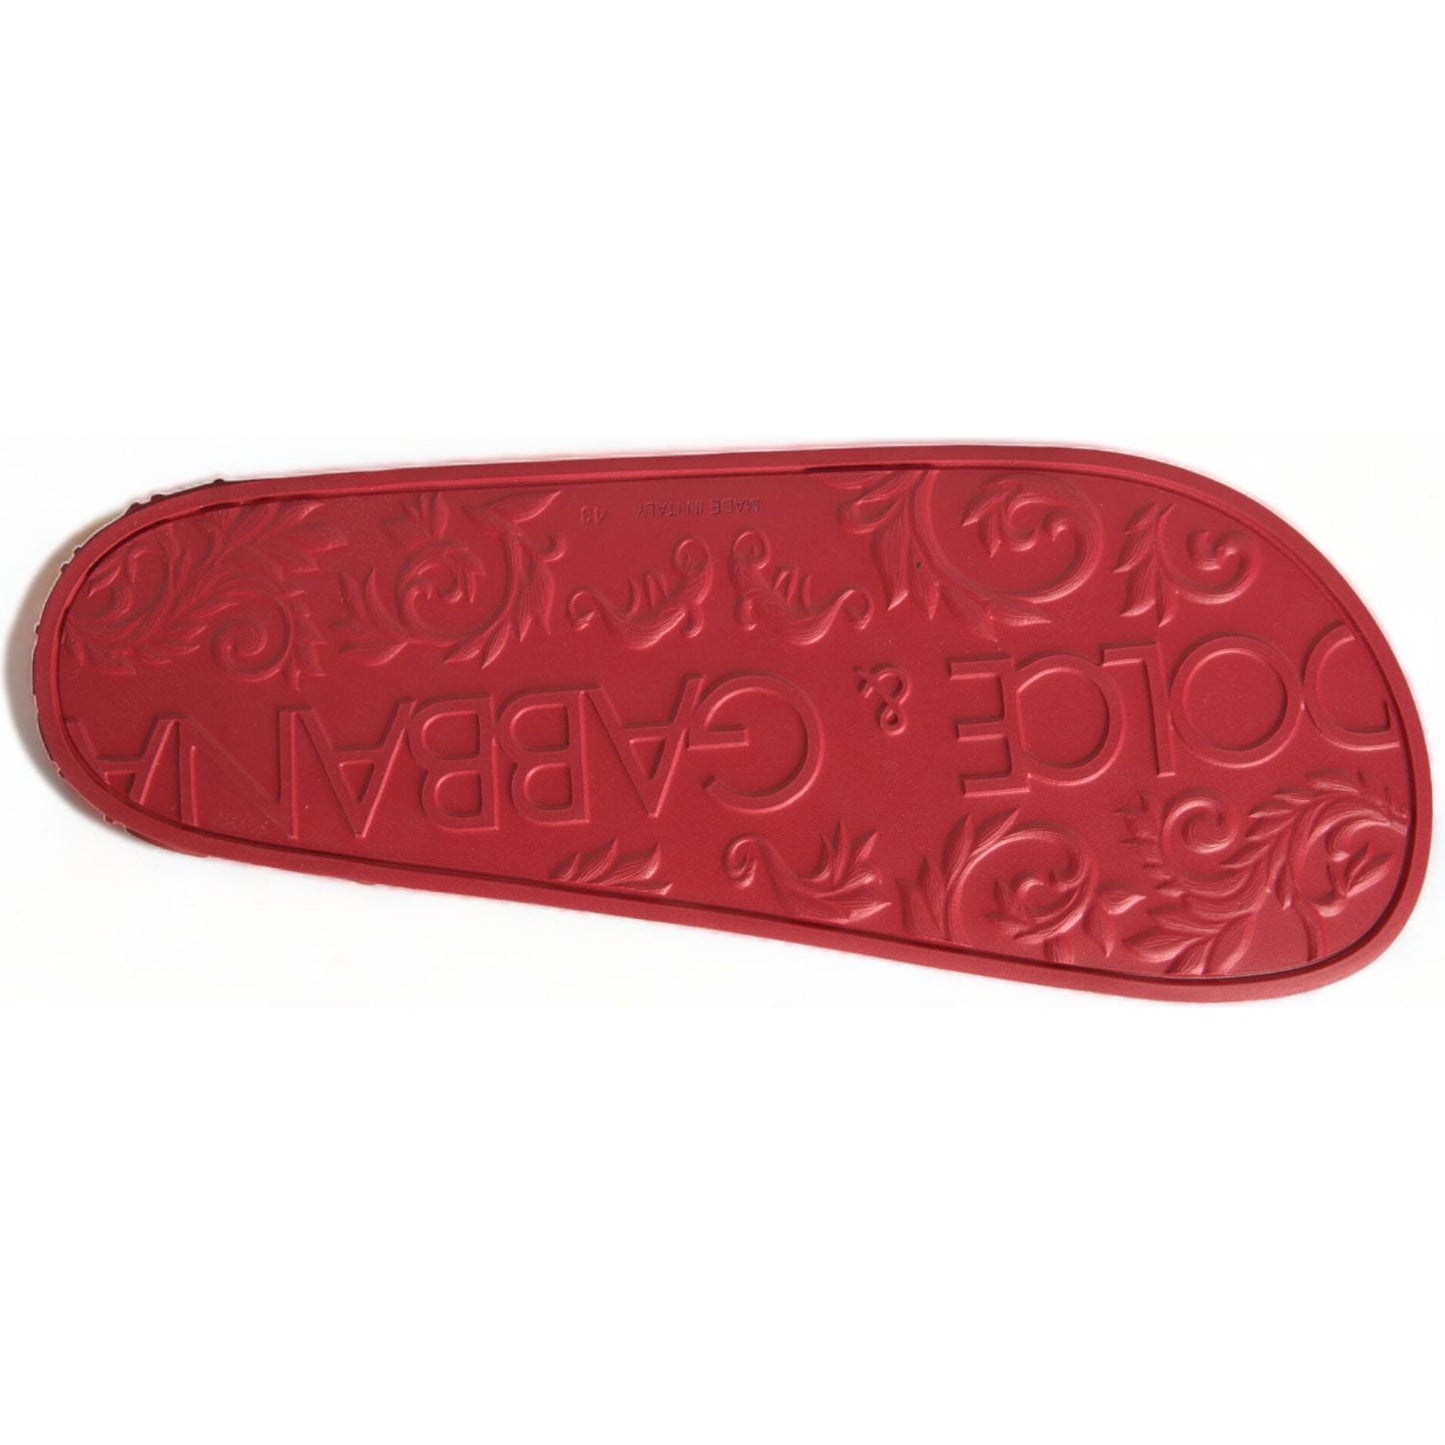 Dolce & Gabbana Radiant Red Men's Slide Sandals red-rubber-summer-beach-slides-sandals